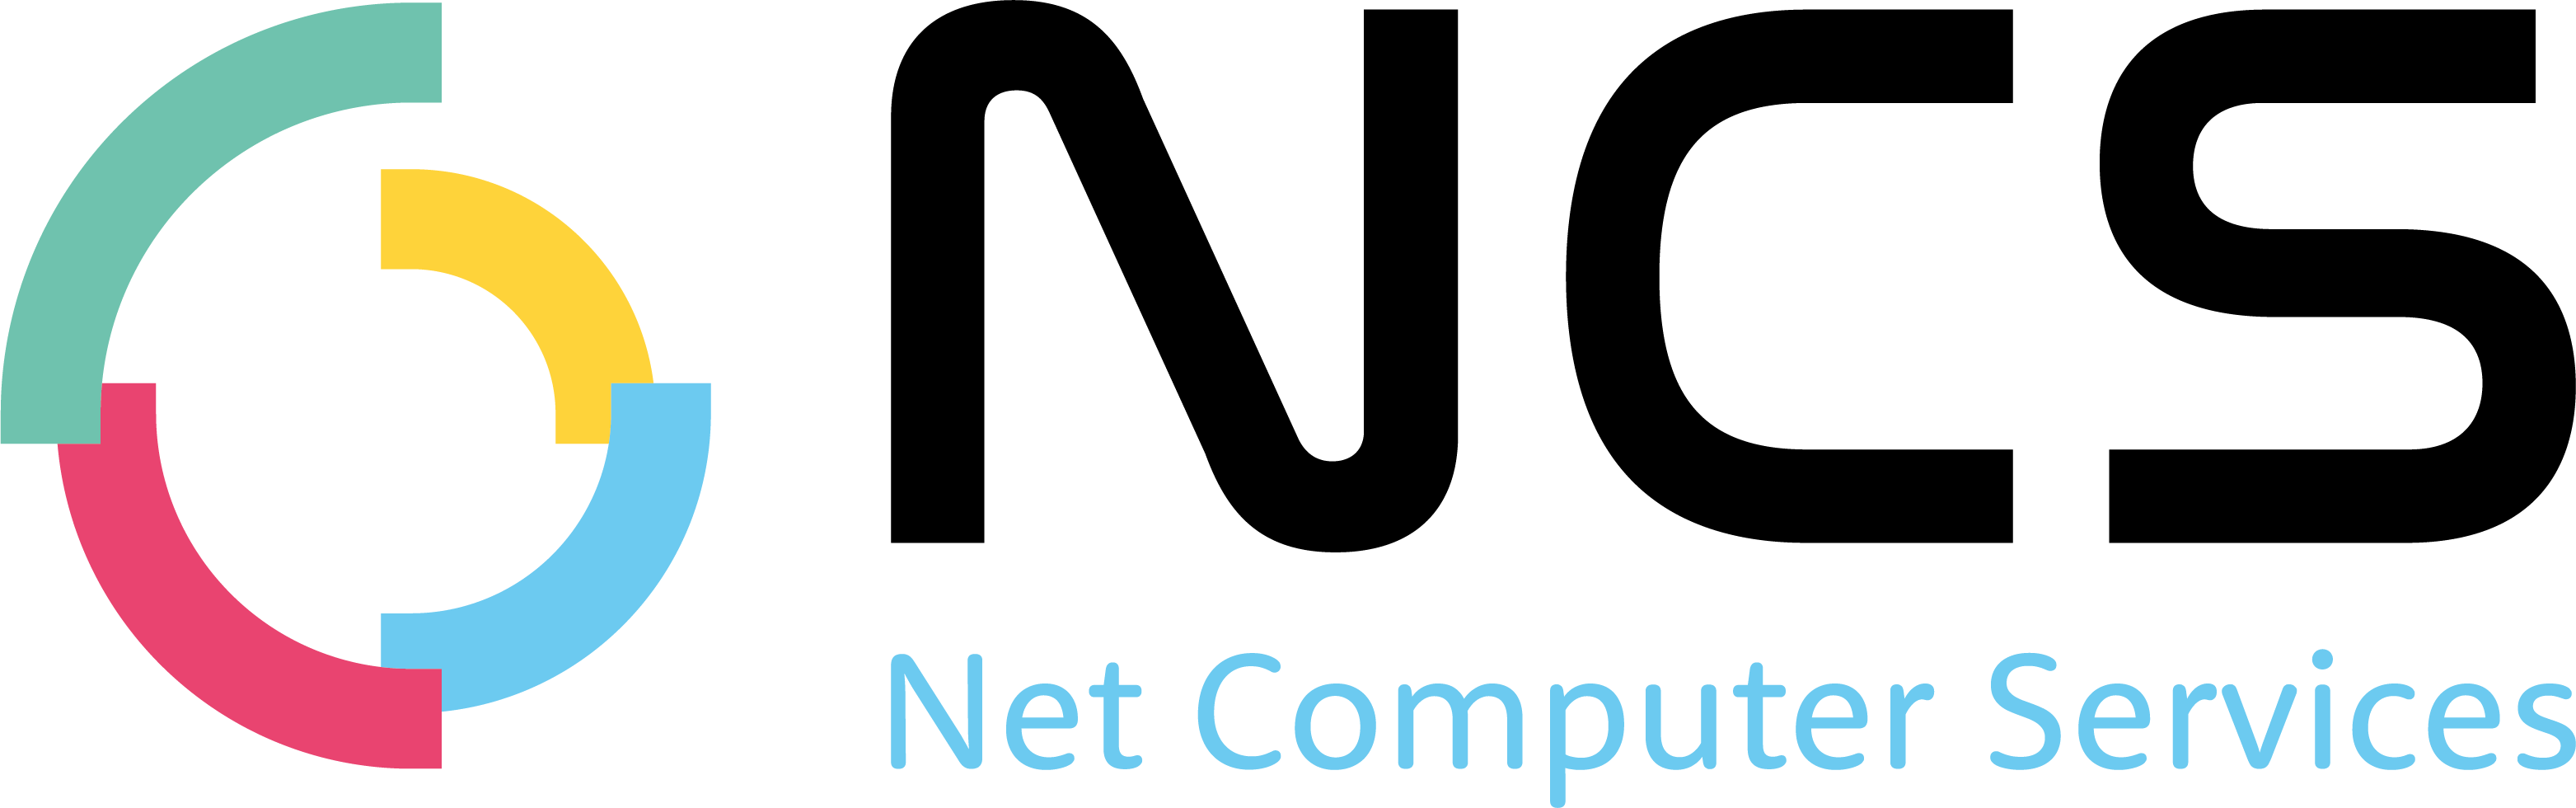 Net Computer Services